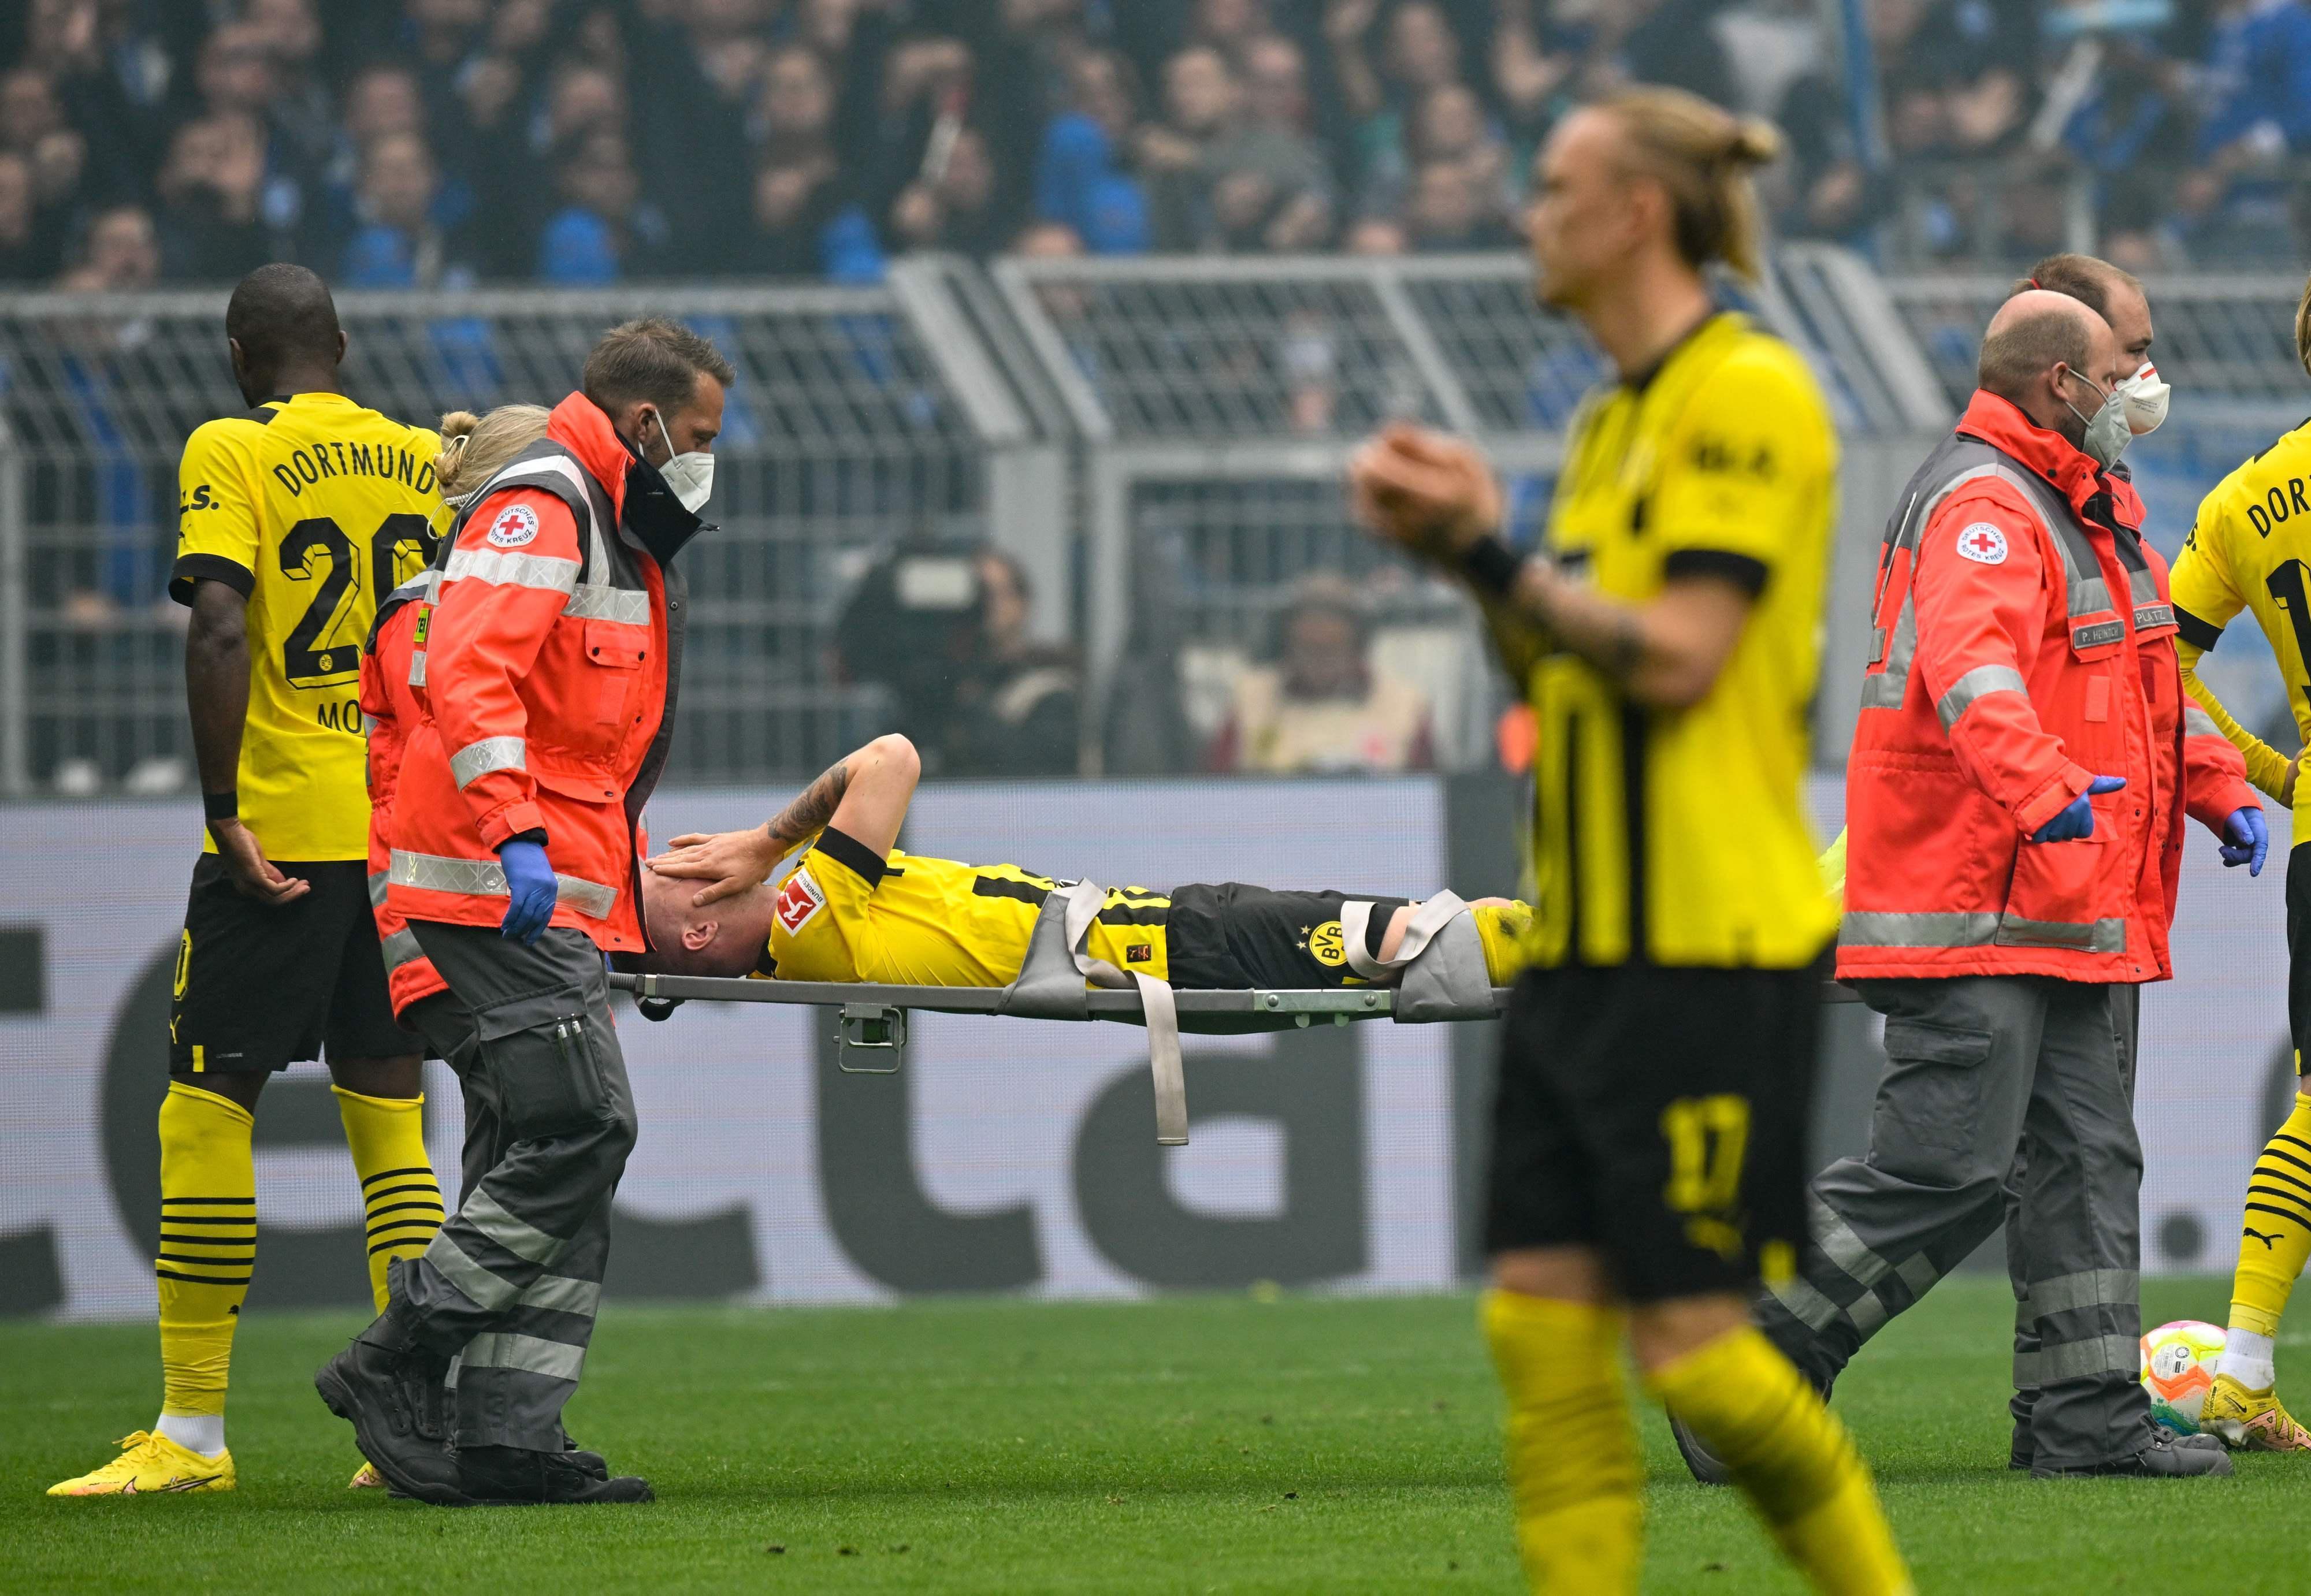 (ÖZET) Borussia Dortmund - Schalke 04 maç sonucu: 1-0